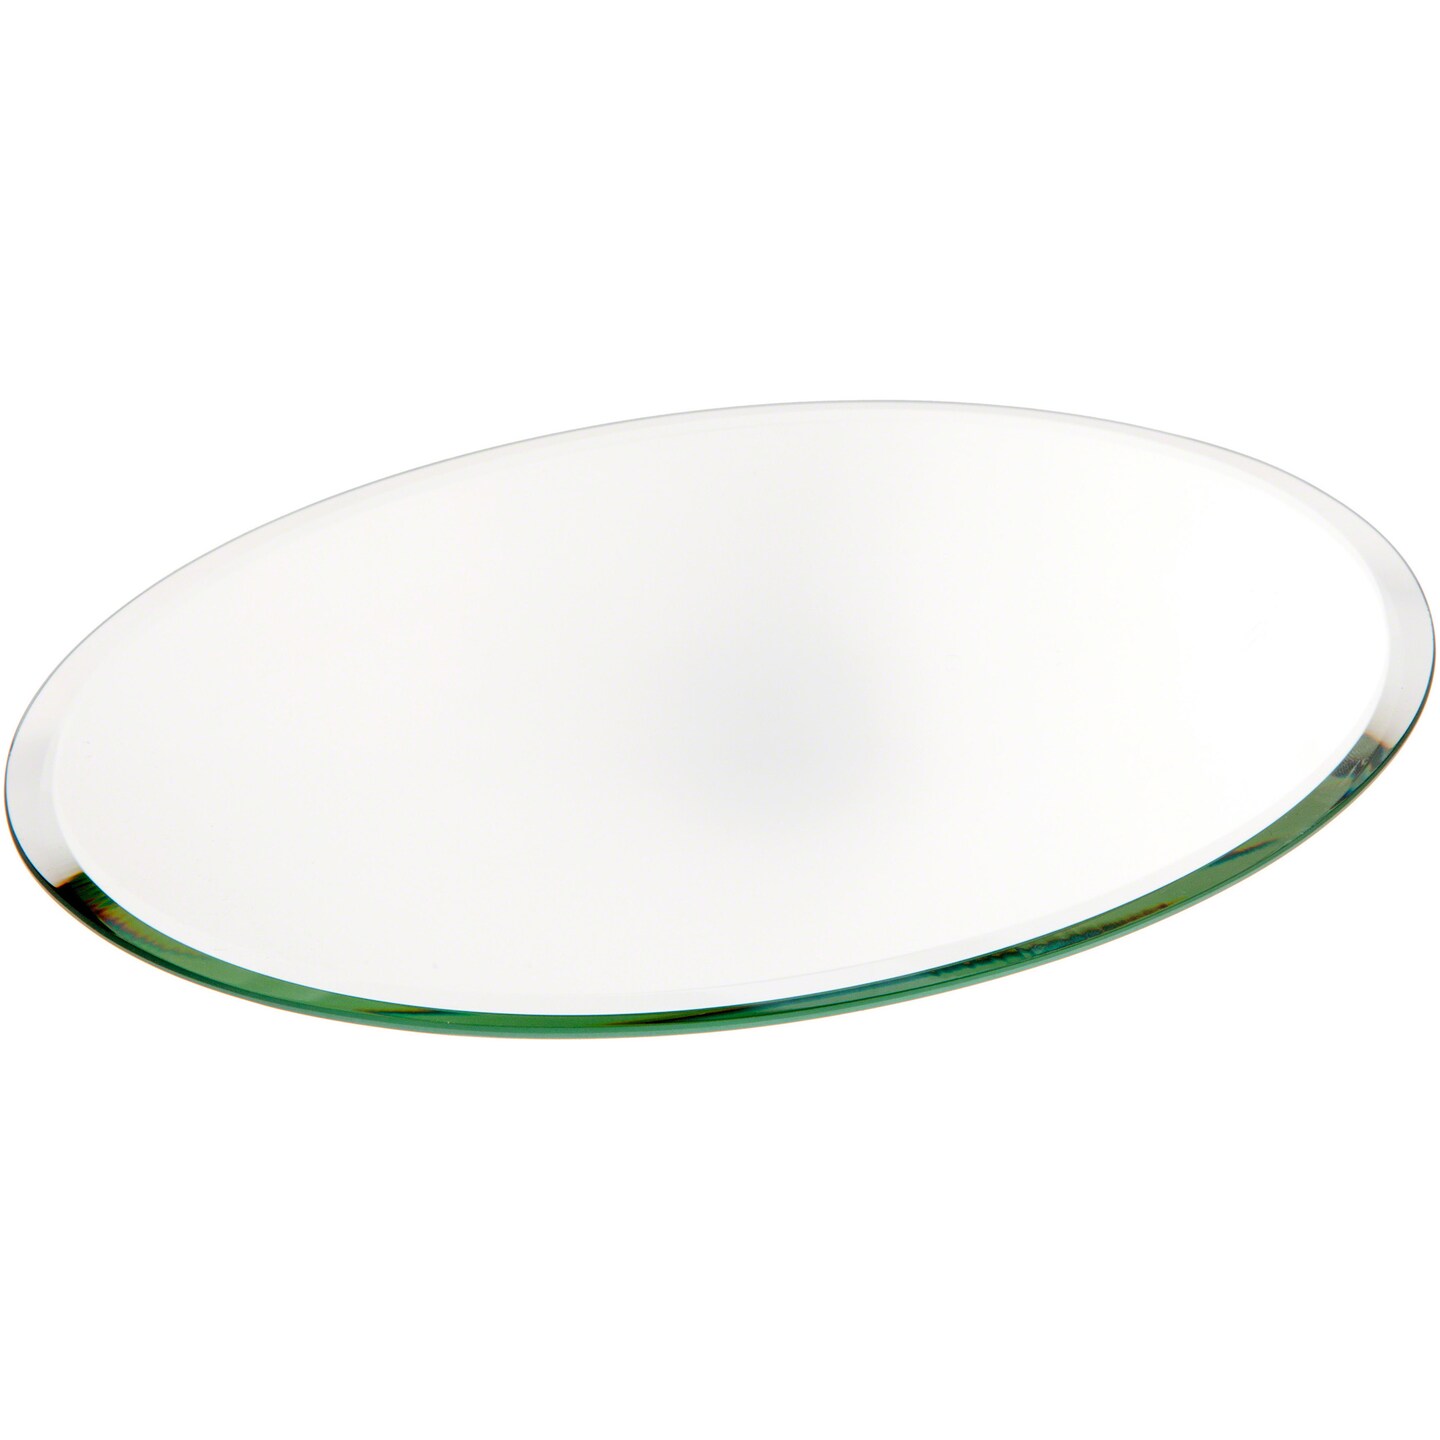 Plymor Oval 3mm Beveled Glass Mirror, 7 inch x 9 inch